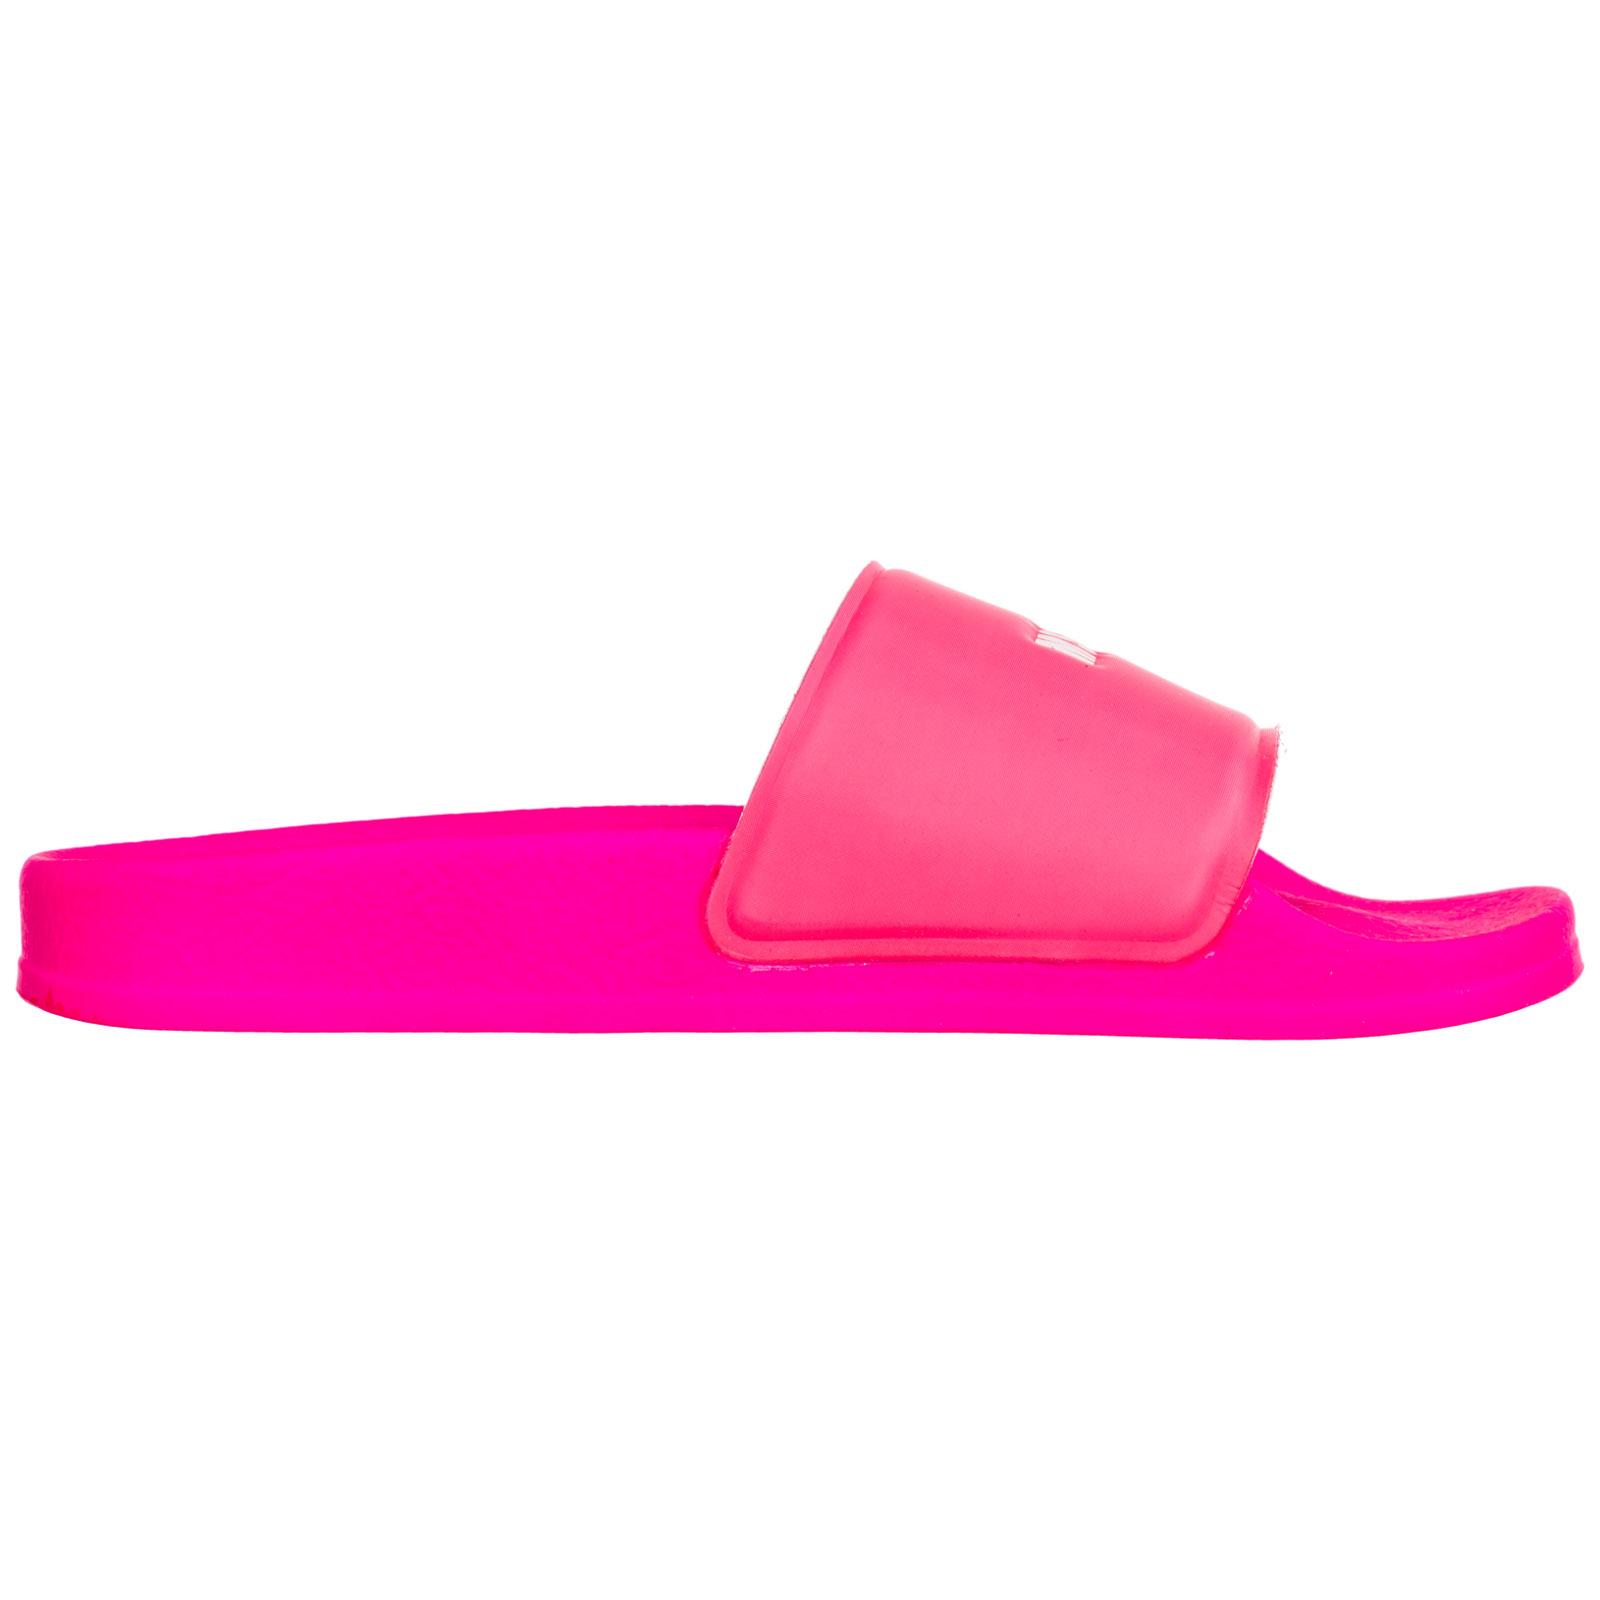 MSGM Rubber Logo Print Slides in Neon Fuchsia (Pink) - Lyst